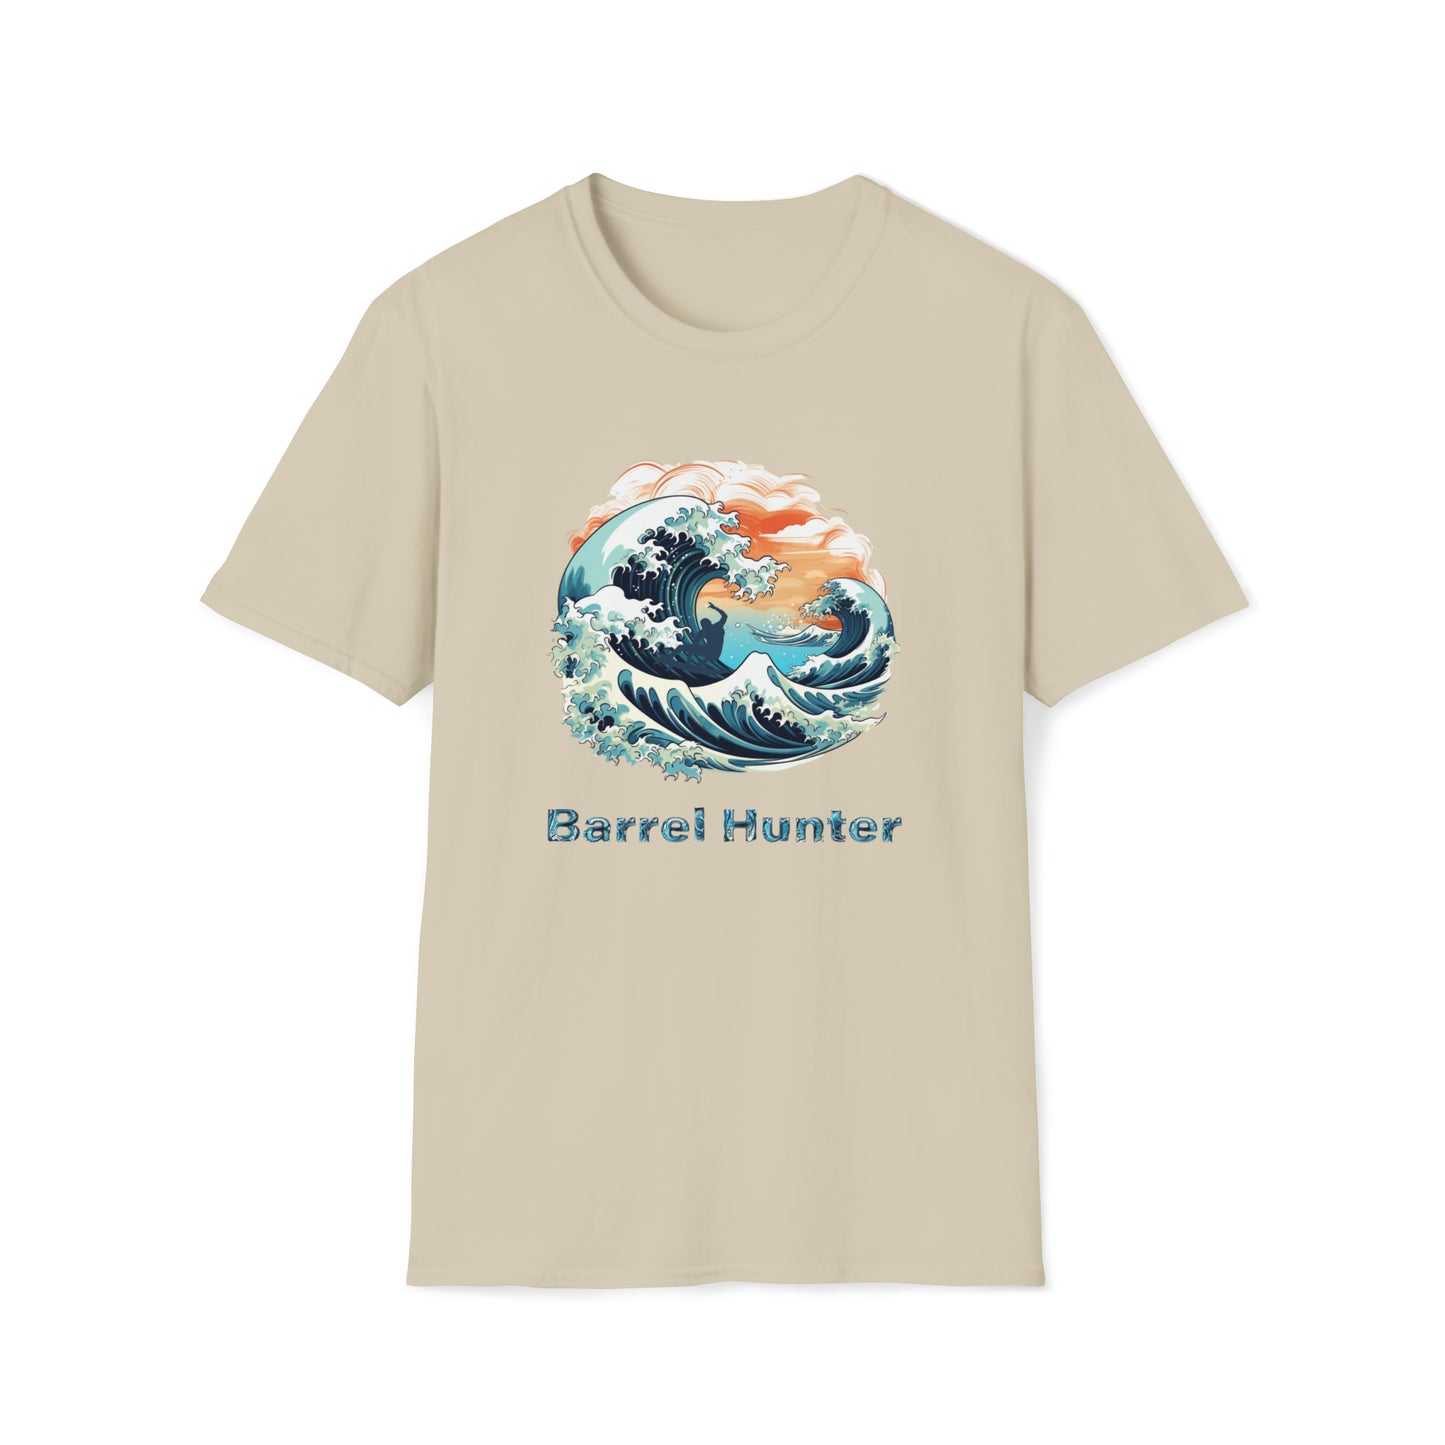 Barrel Hunter surfing t-shirt in sandstone 